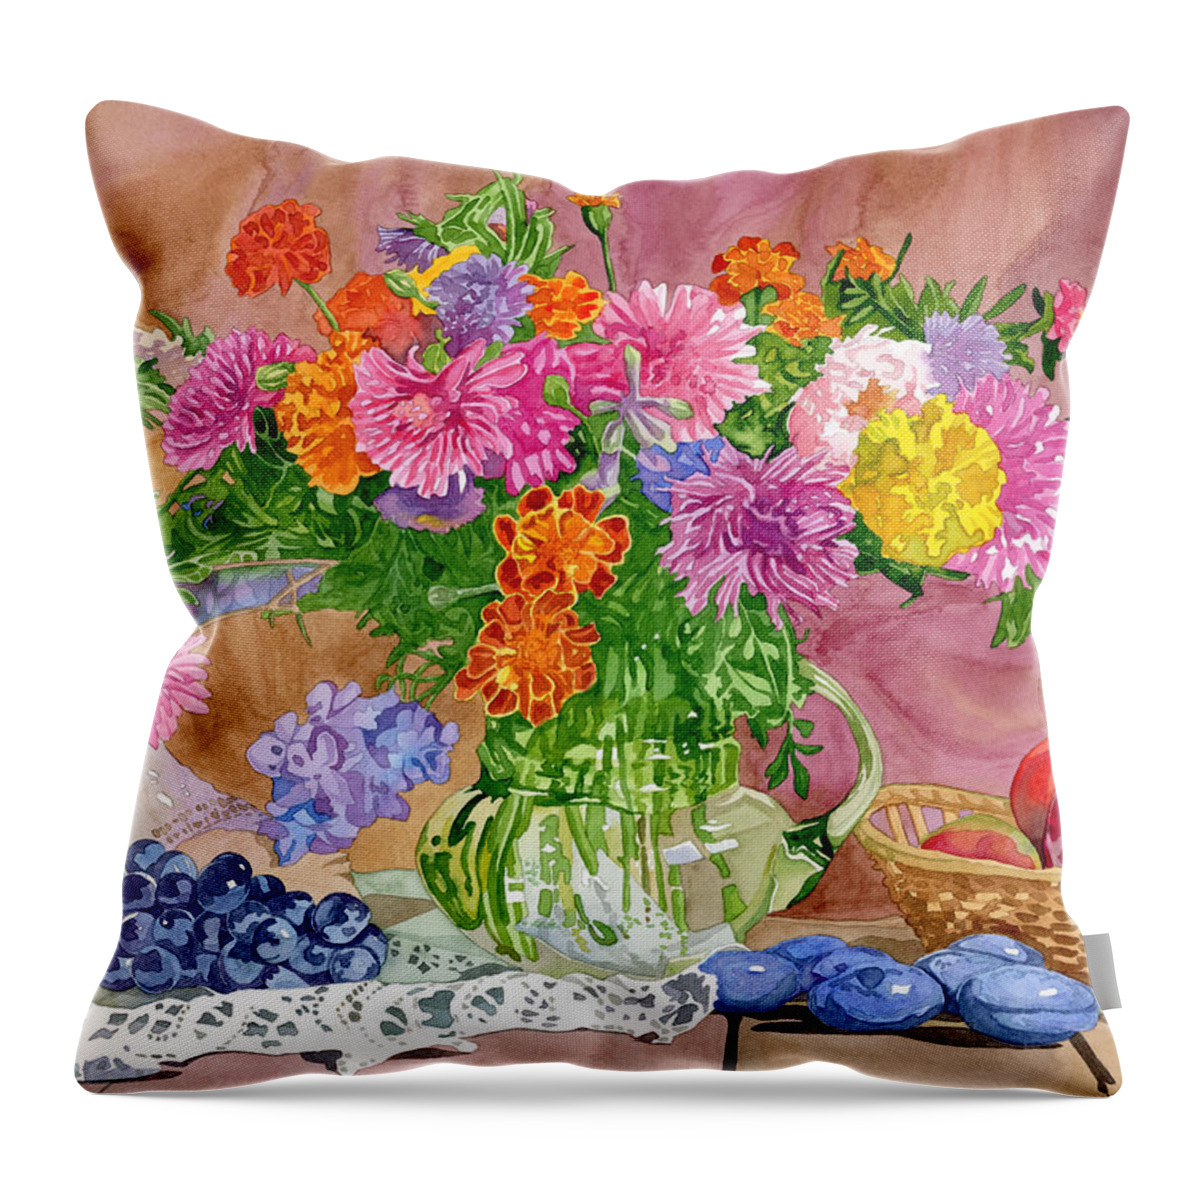 Summer Throw Pillow featuring the painting Summer Bouquet by Espero Art